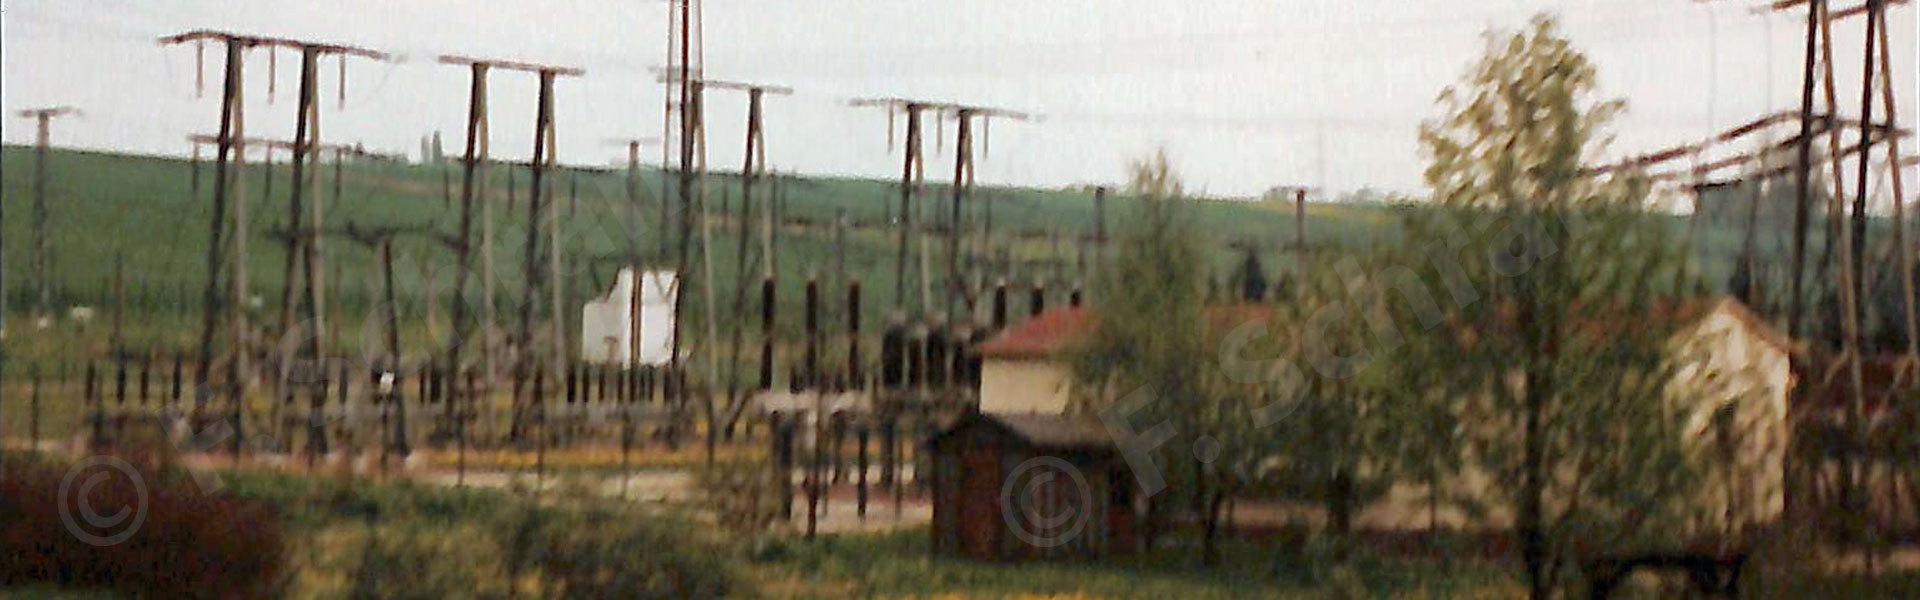 Umspannwerk Köthensdorf (1998)